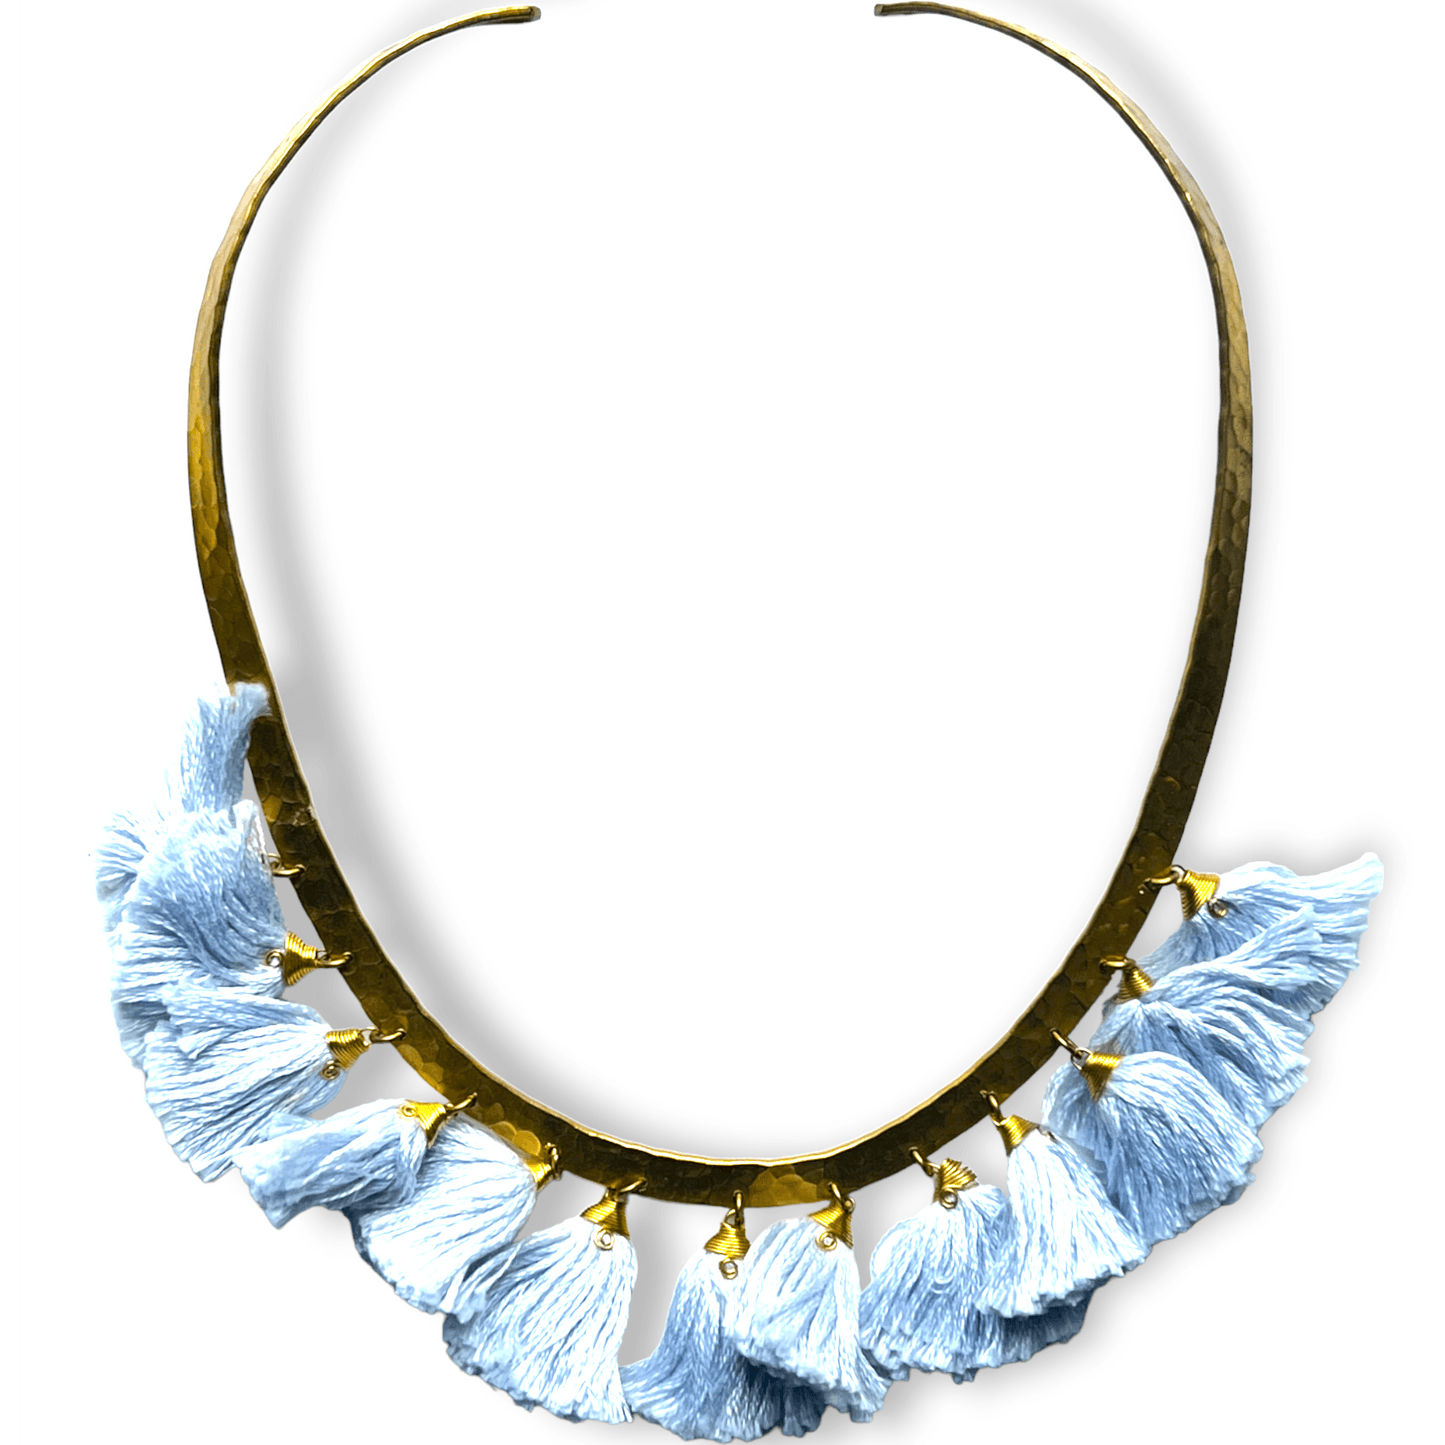 Choker necklace with colored tassels - Sundara Joon